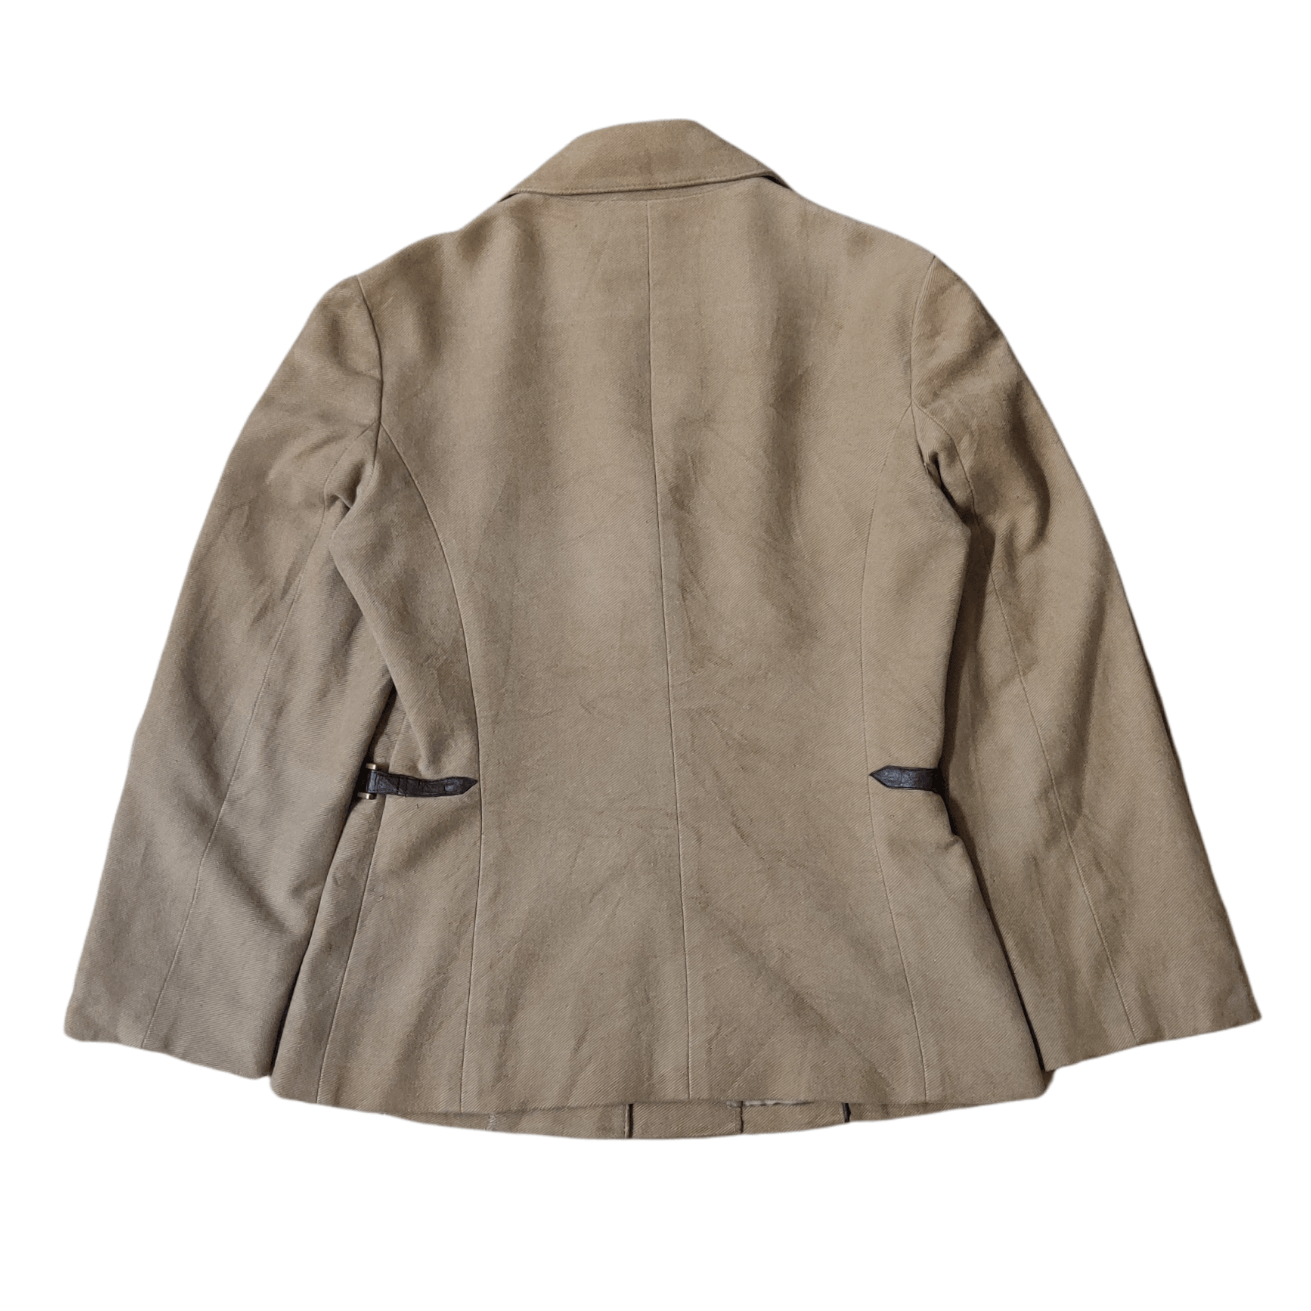 Burberry Blue Label Women's Coat Jacket - 9